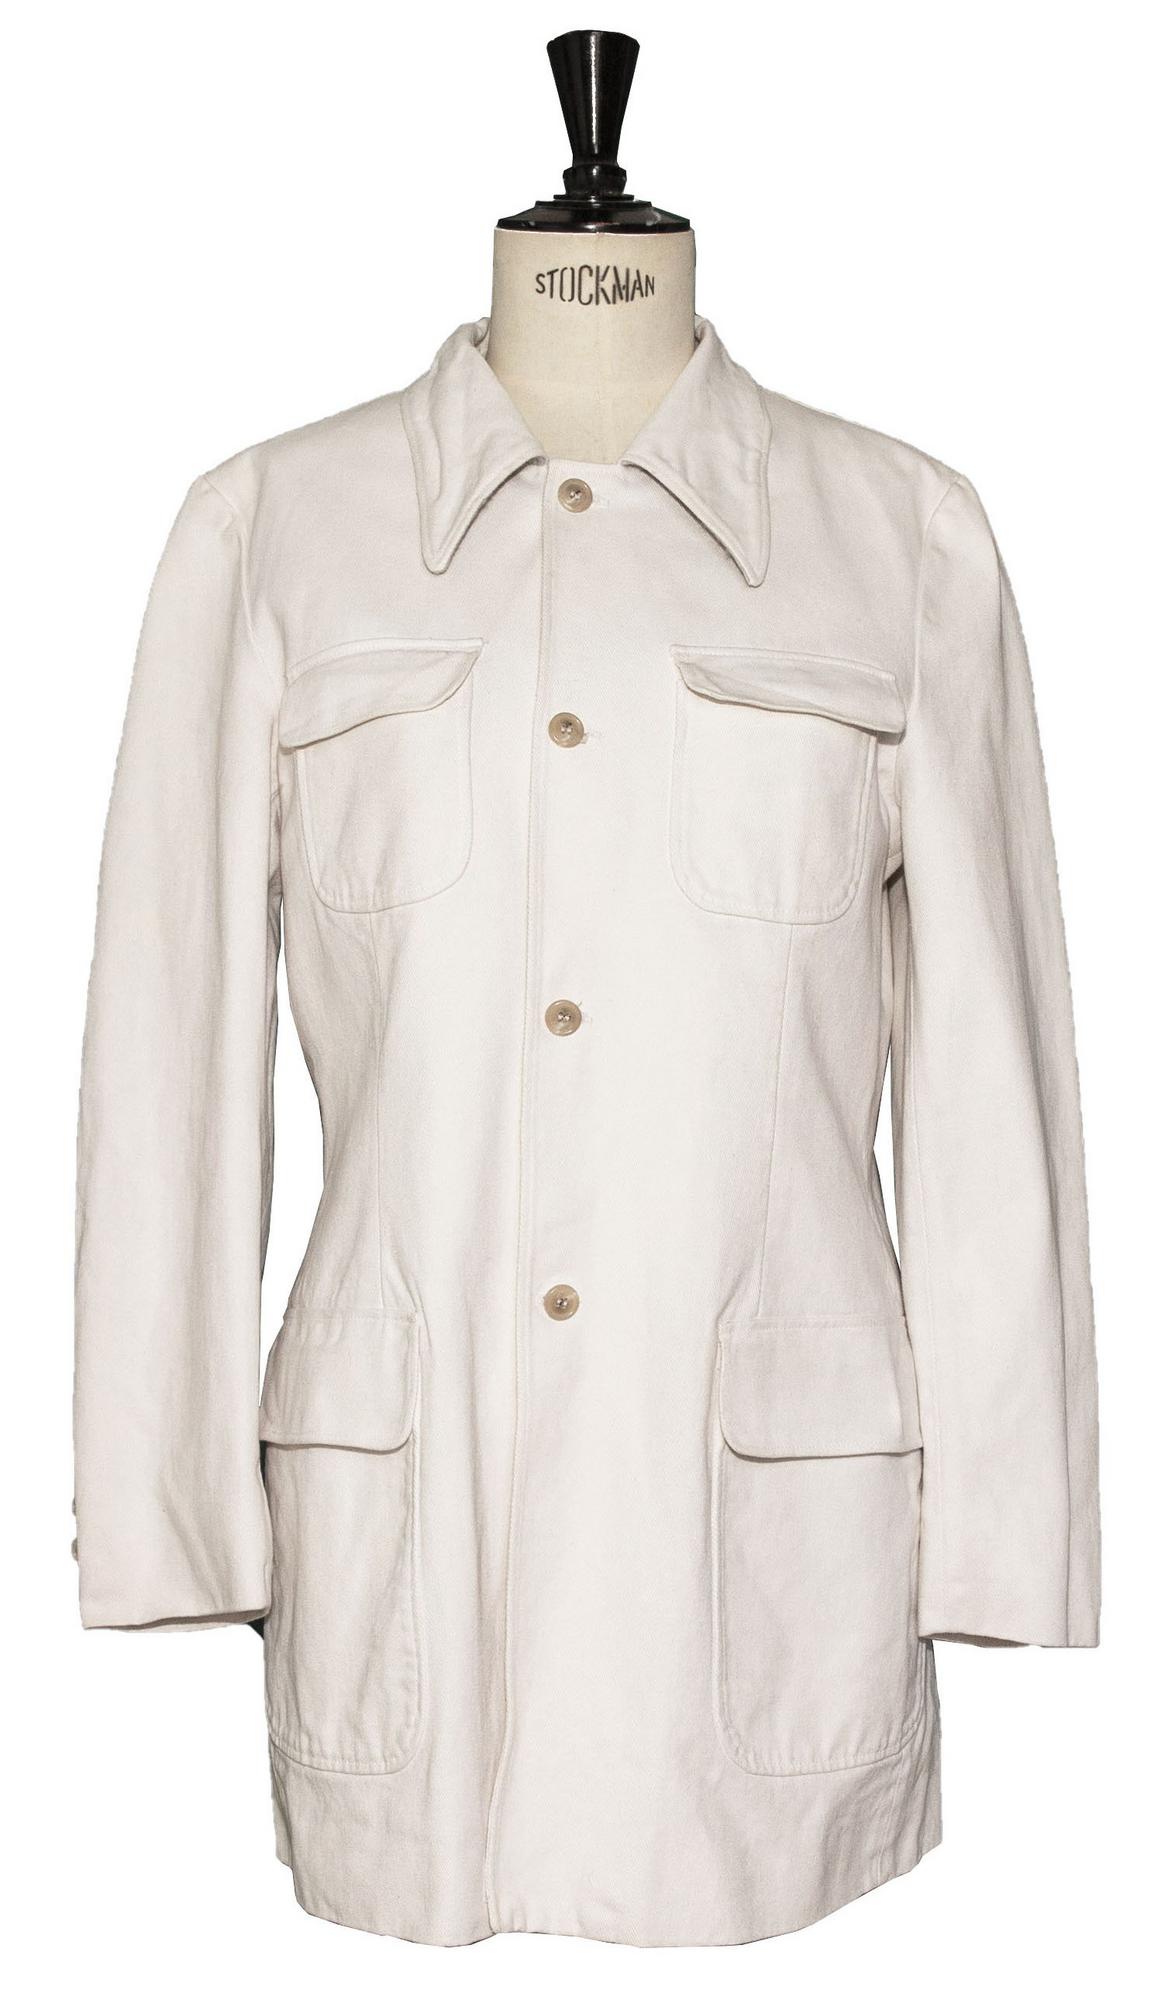 Martin Margiela - Reproduction WHITE JACKET Description: Cotton lined jacket...